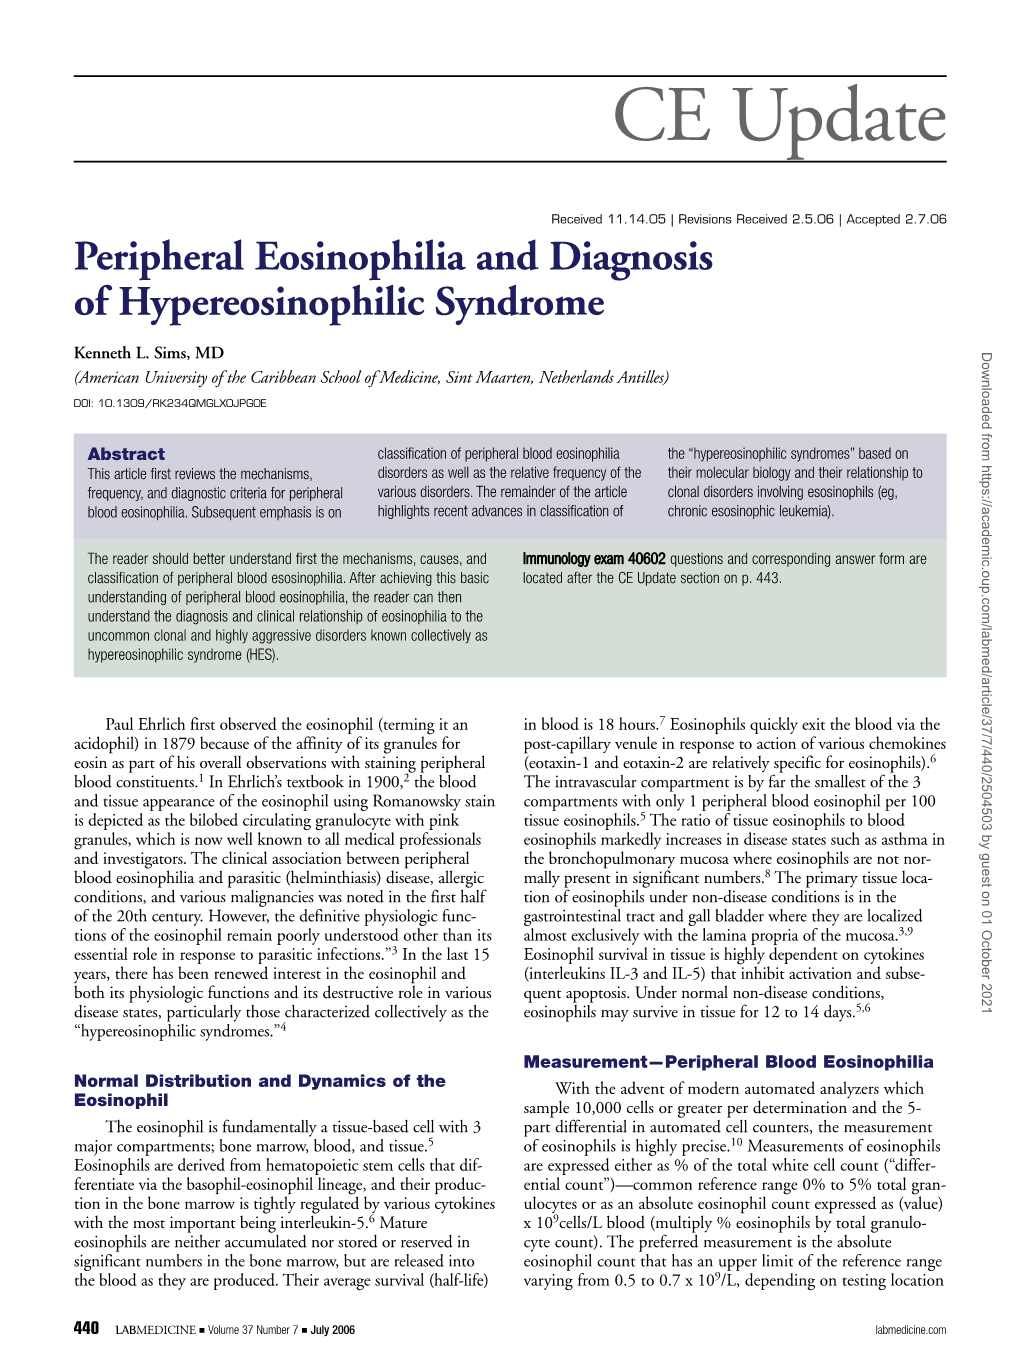 Peripheral Eosinophilia and Diagnosis of Hypereosinophilic Syndrome